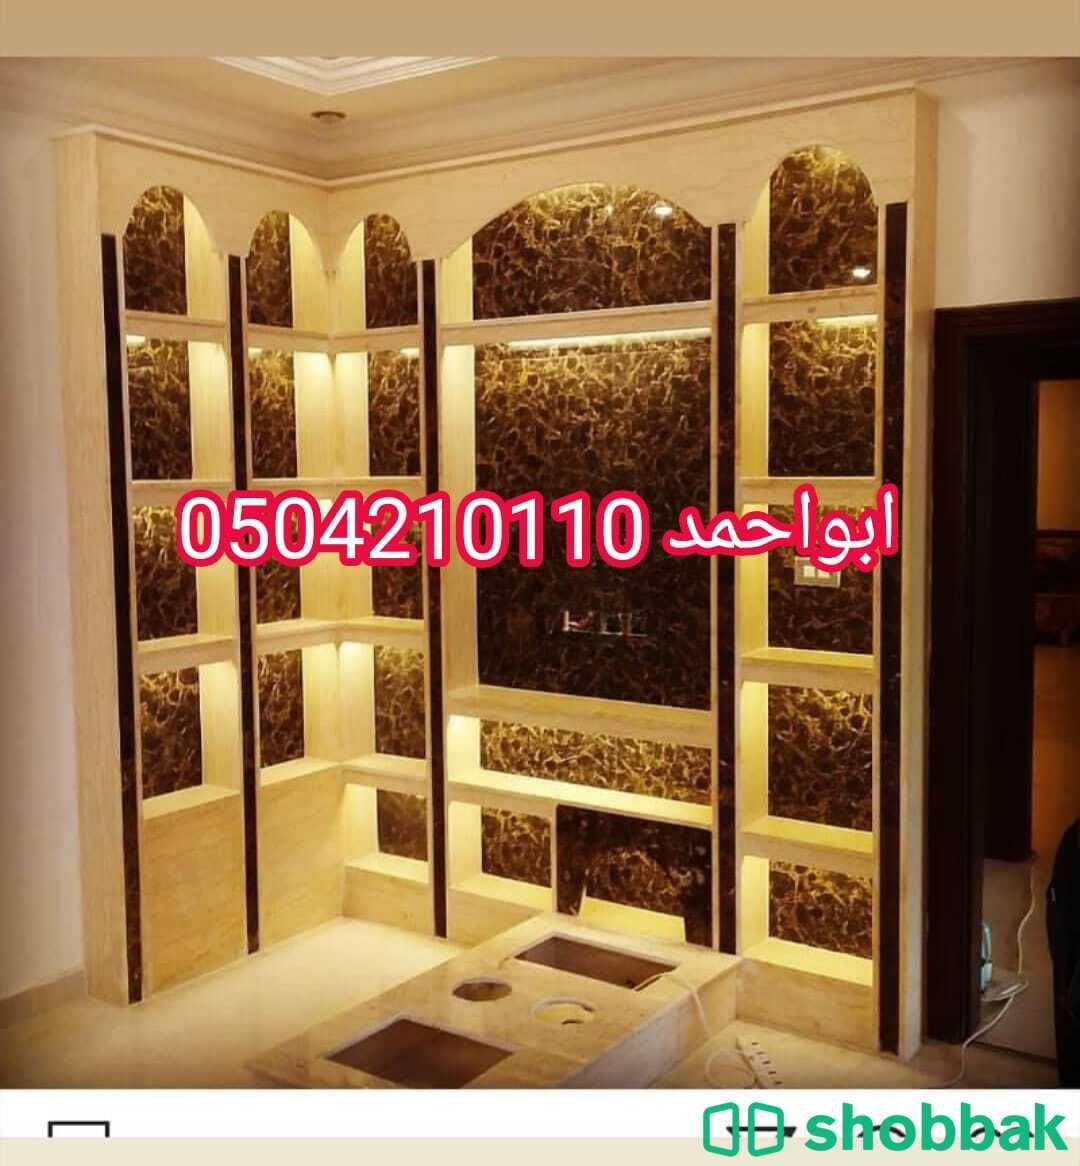 مجال تصميمات ,ديكورات  Shobbak Saudi Arabia